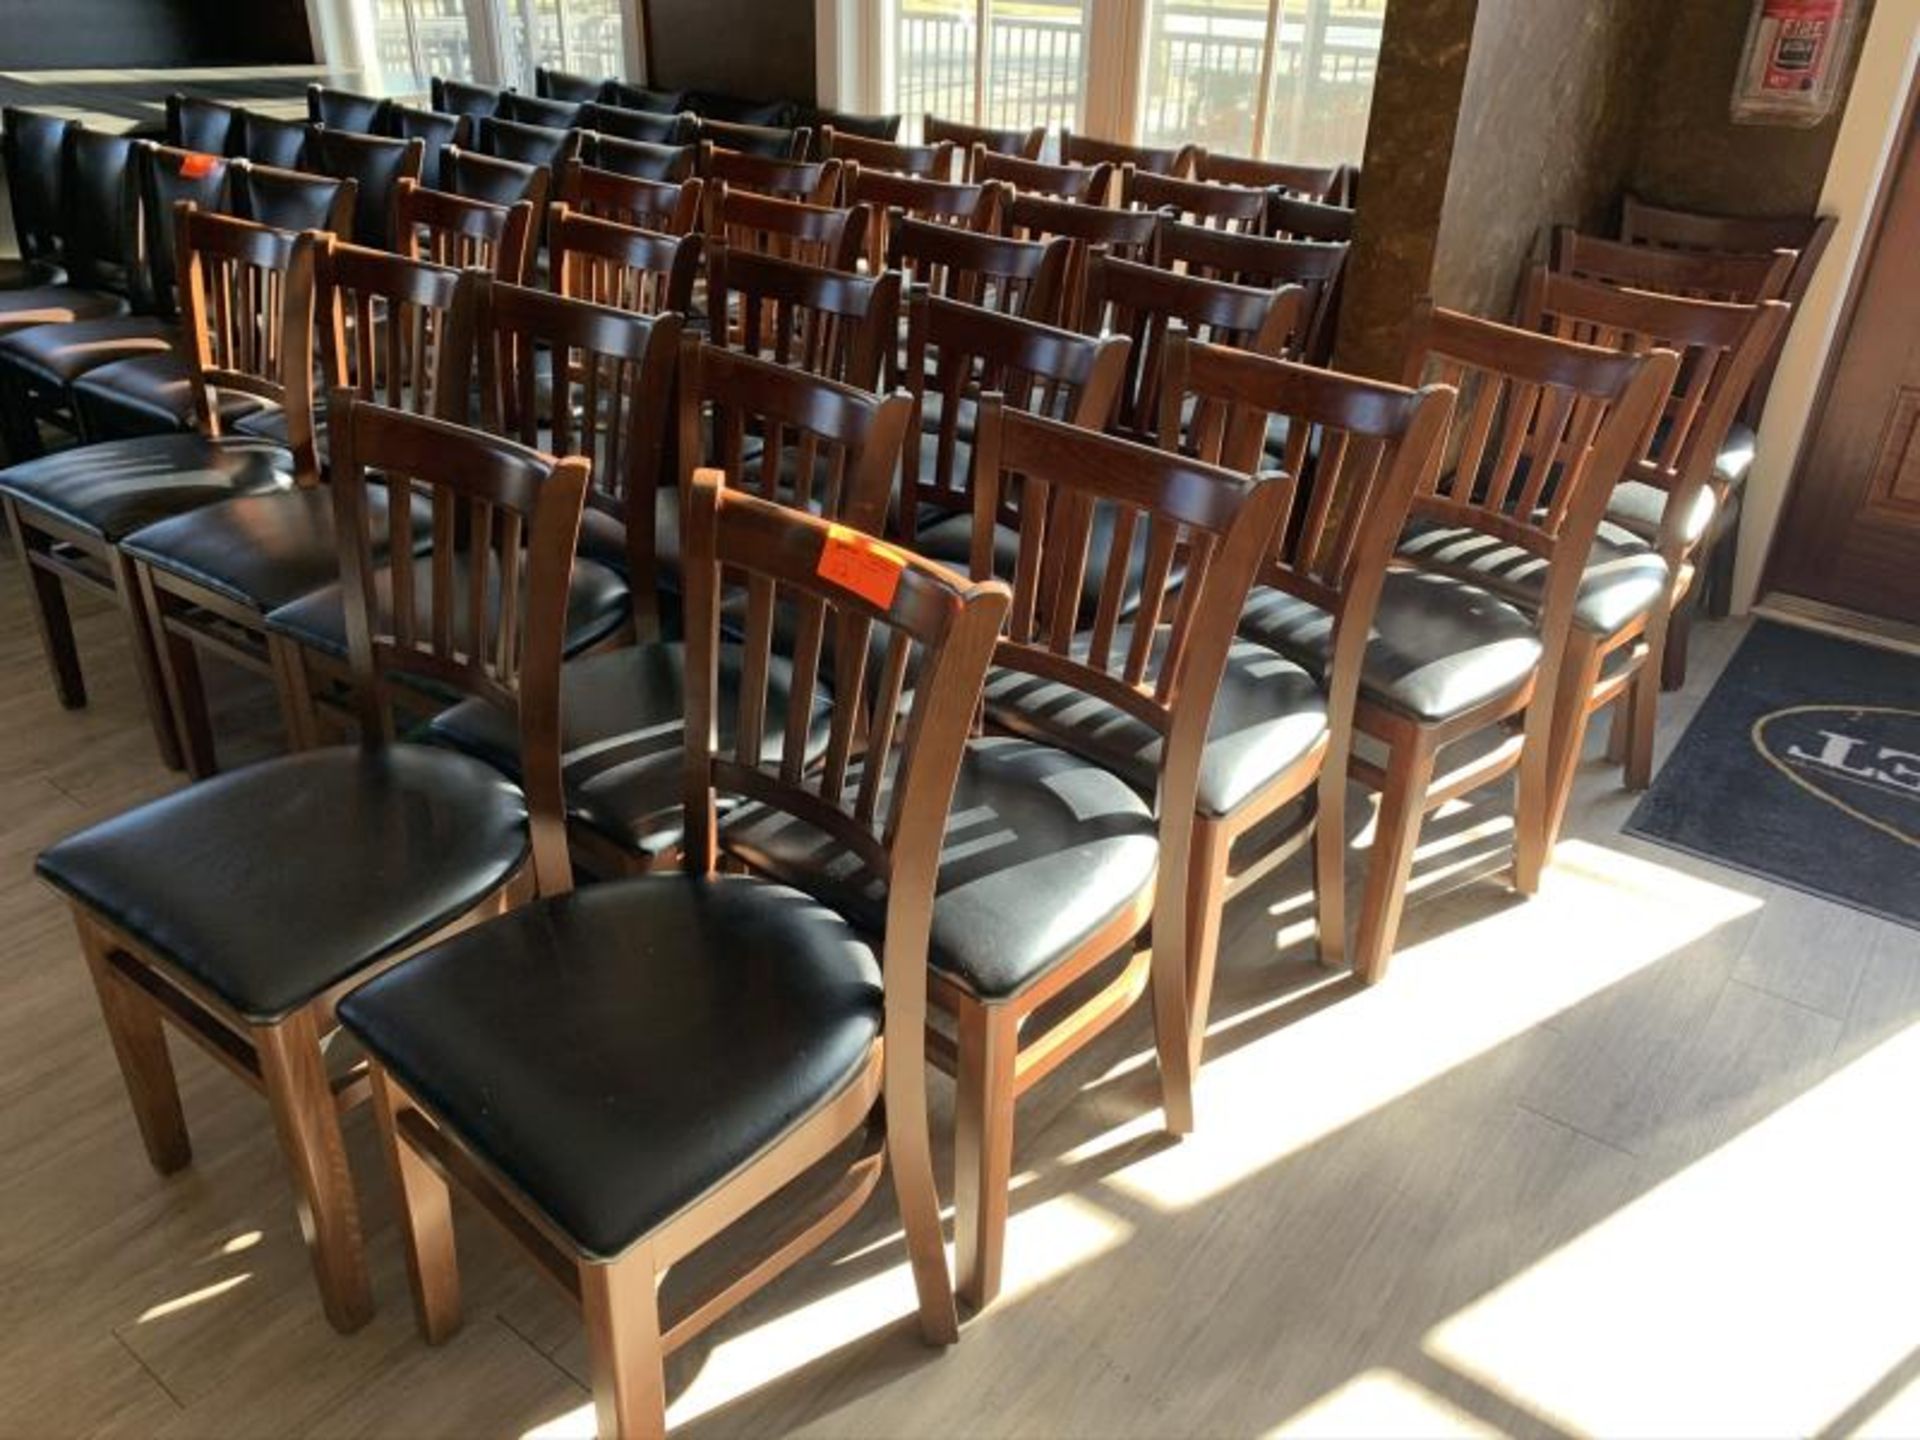 40 Dining chairs, wood frame, black vinyl seat